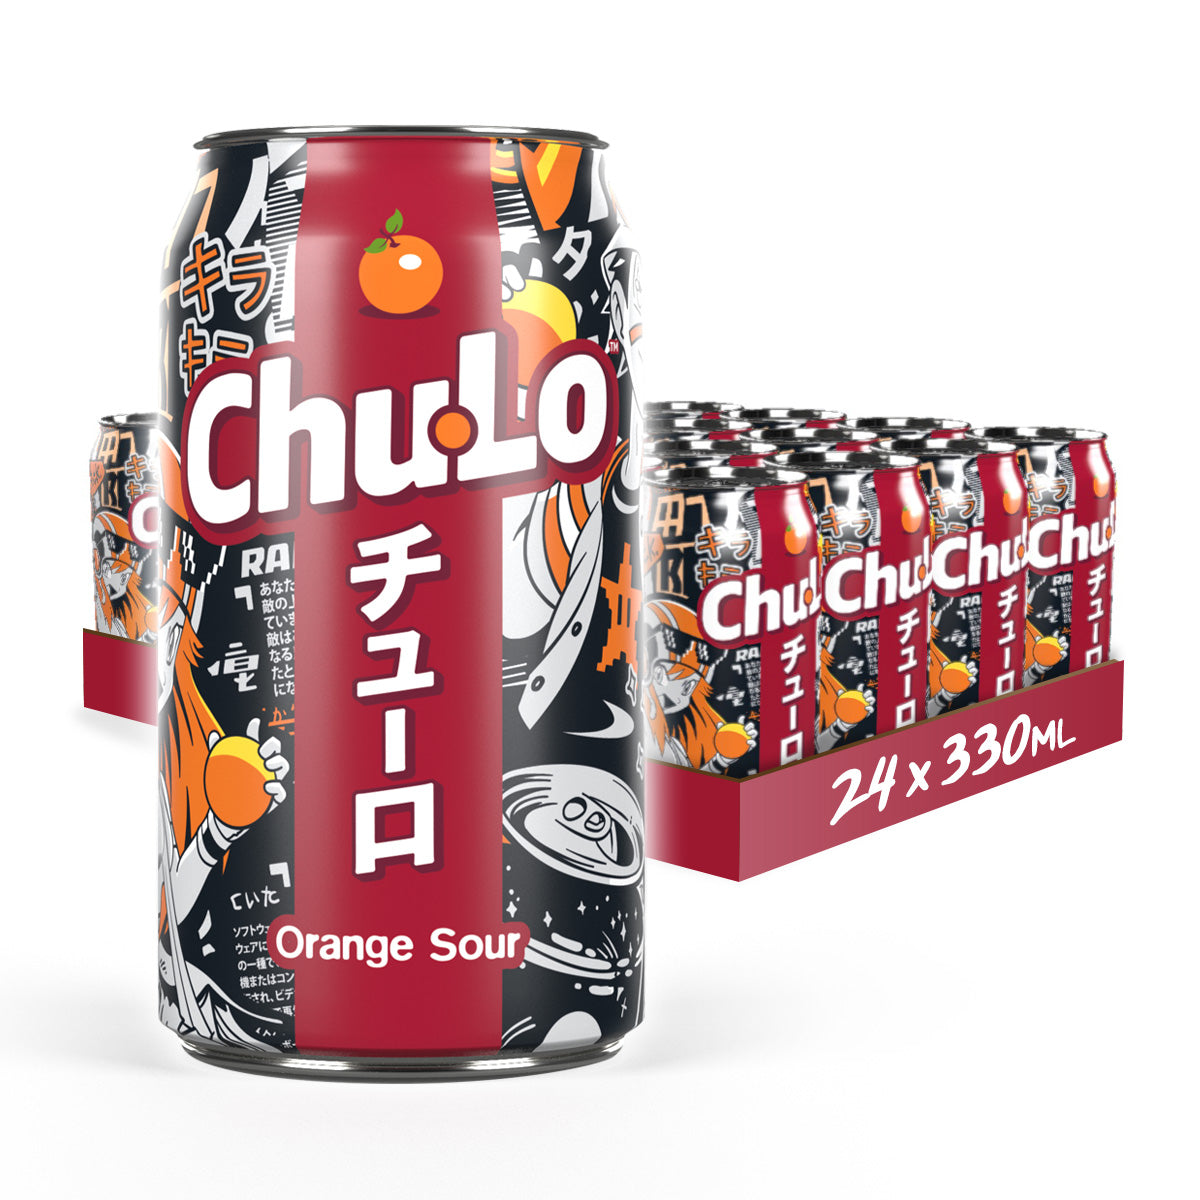 Orange Sour Chu Lo 24 pack